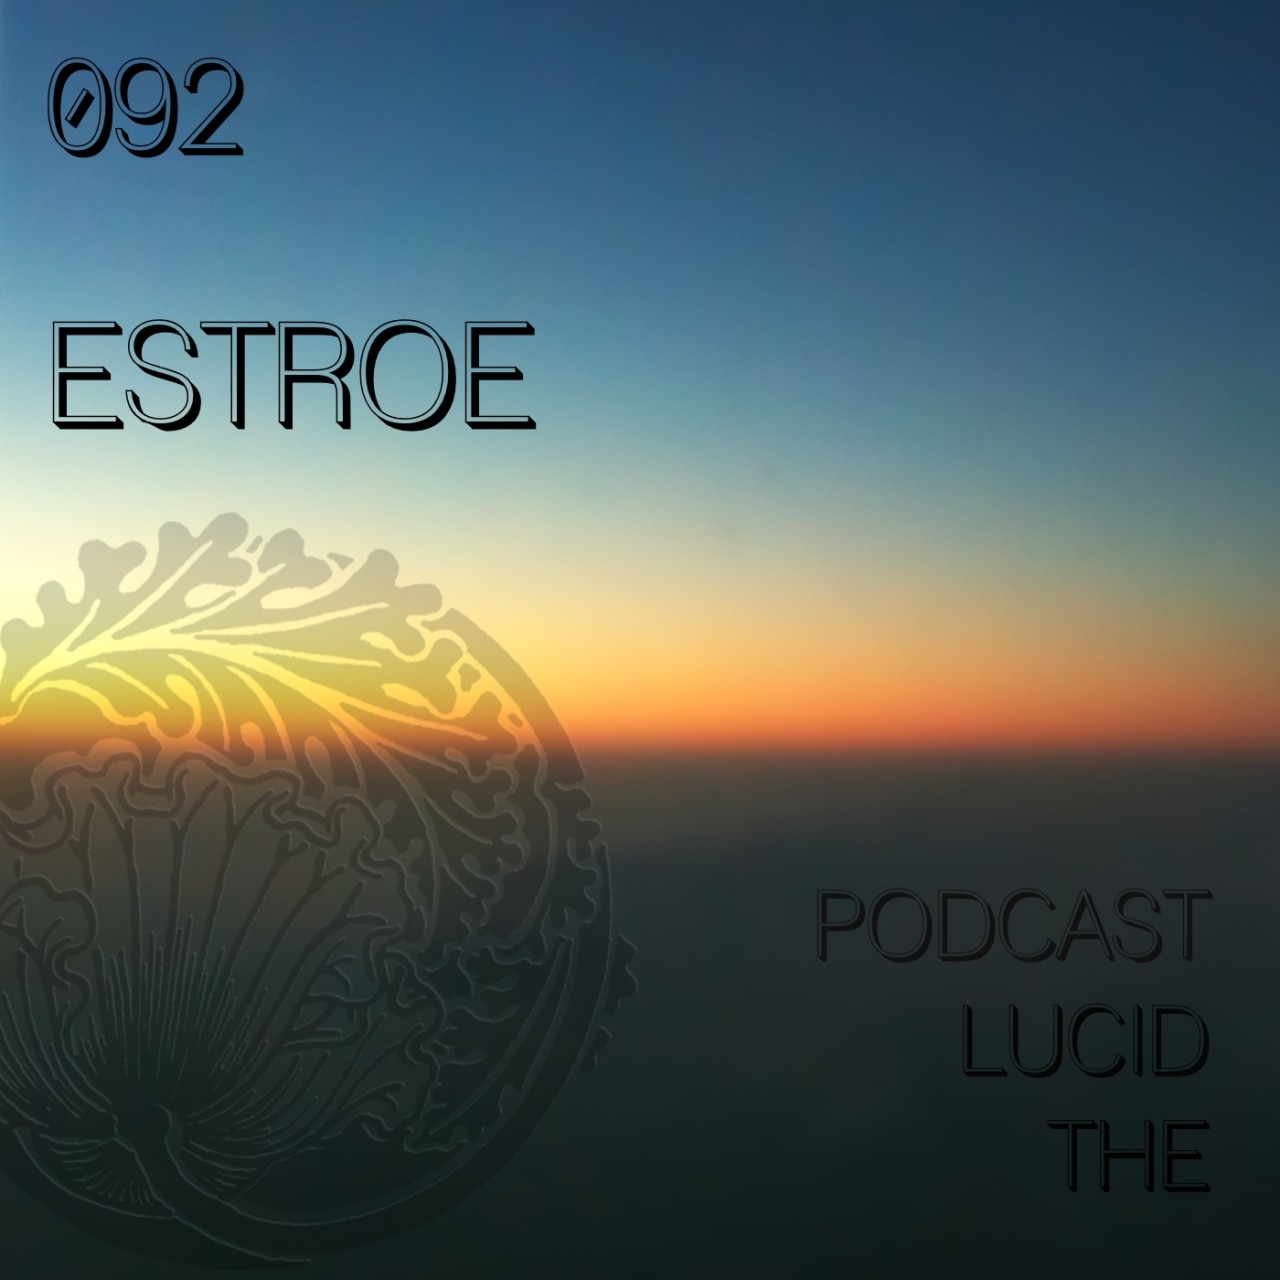 The Lucid Podcast 092 Estroe